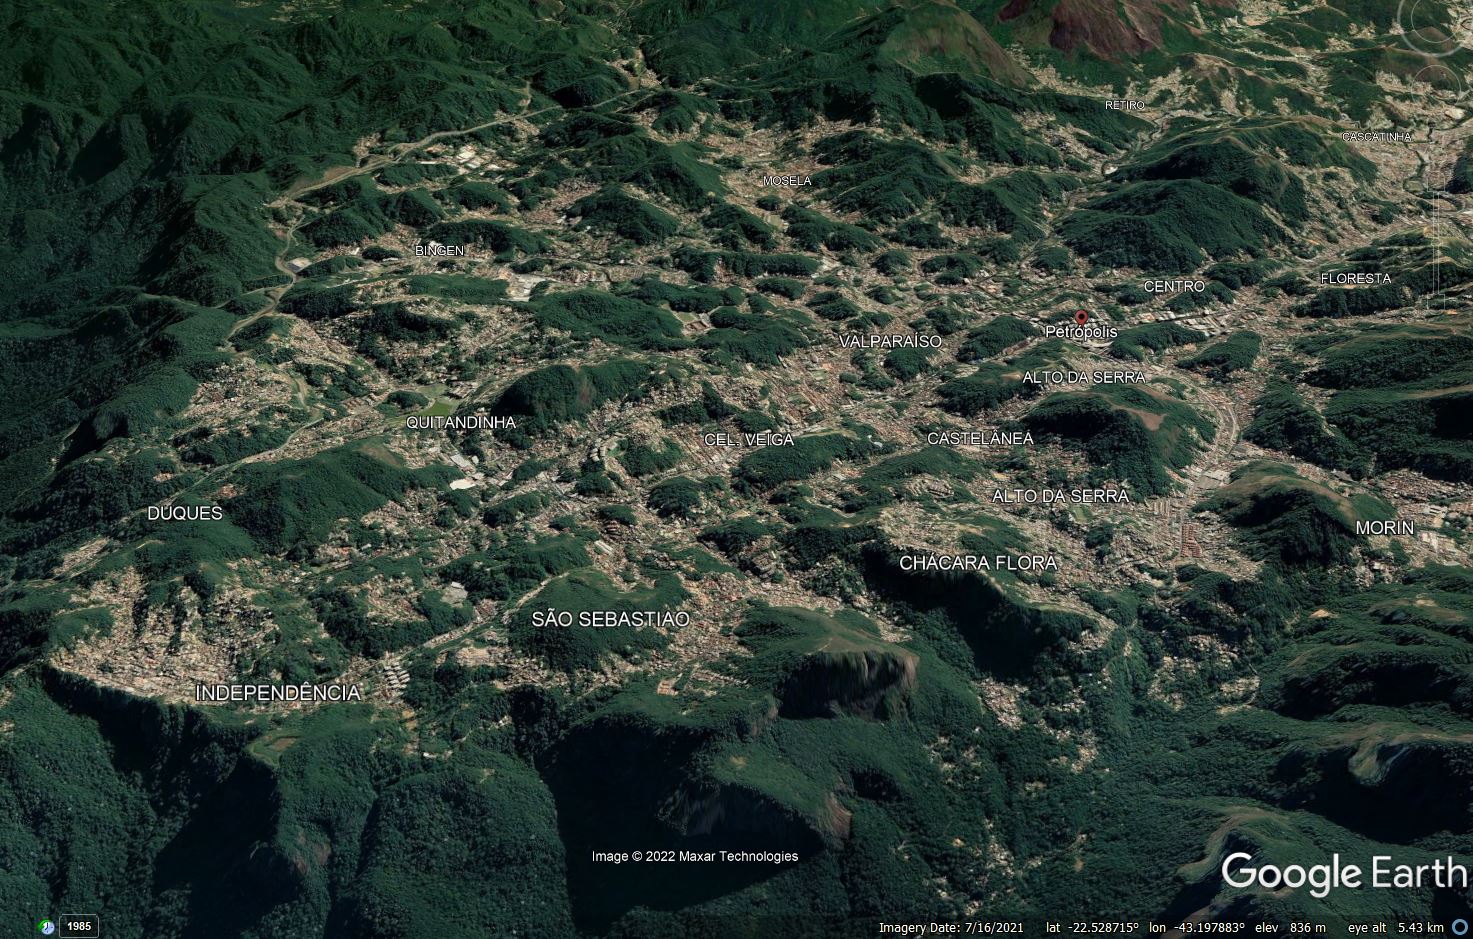 Google Earth image of the city of Petrópolis in Brazil.